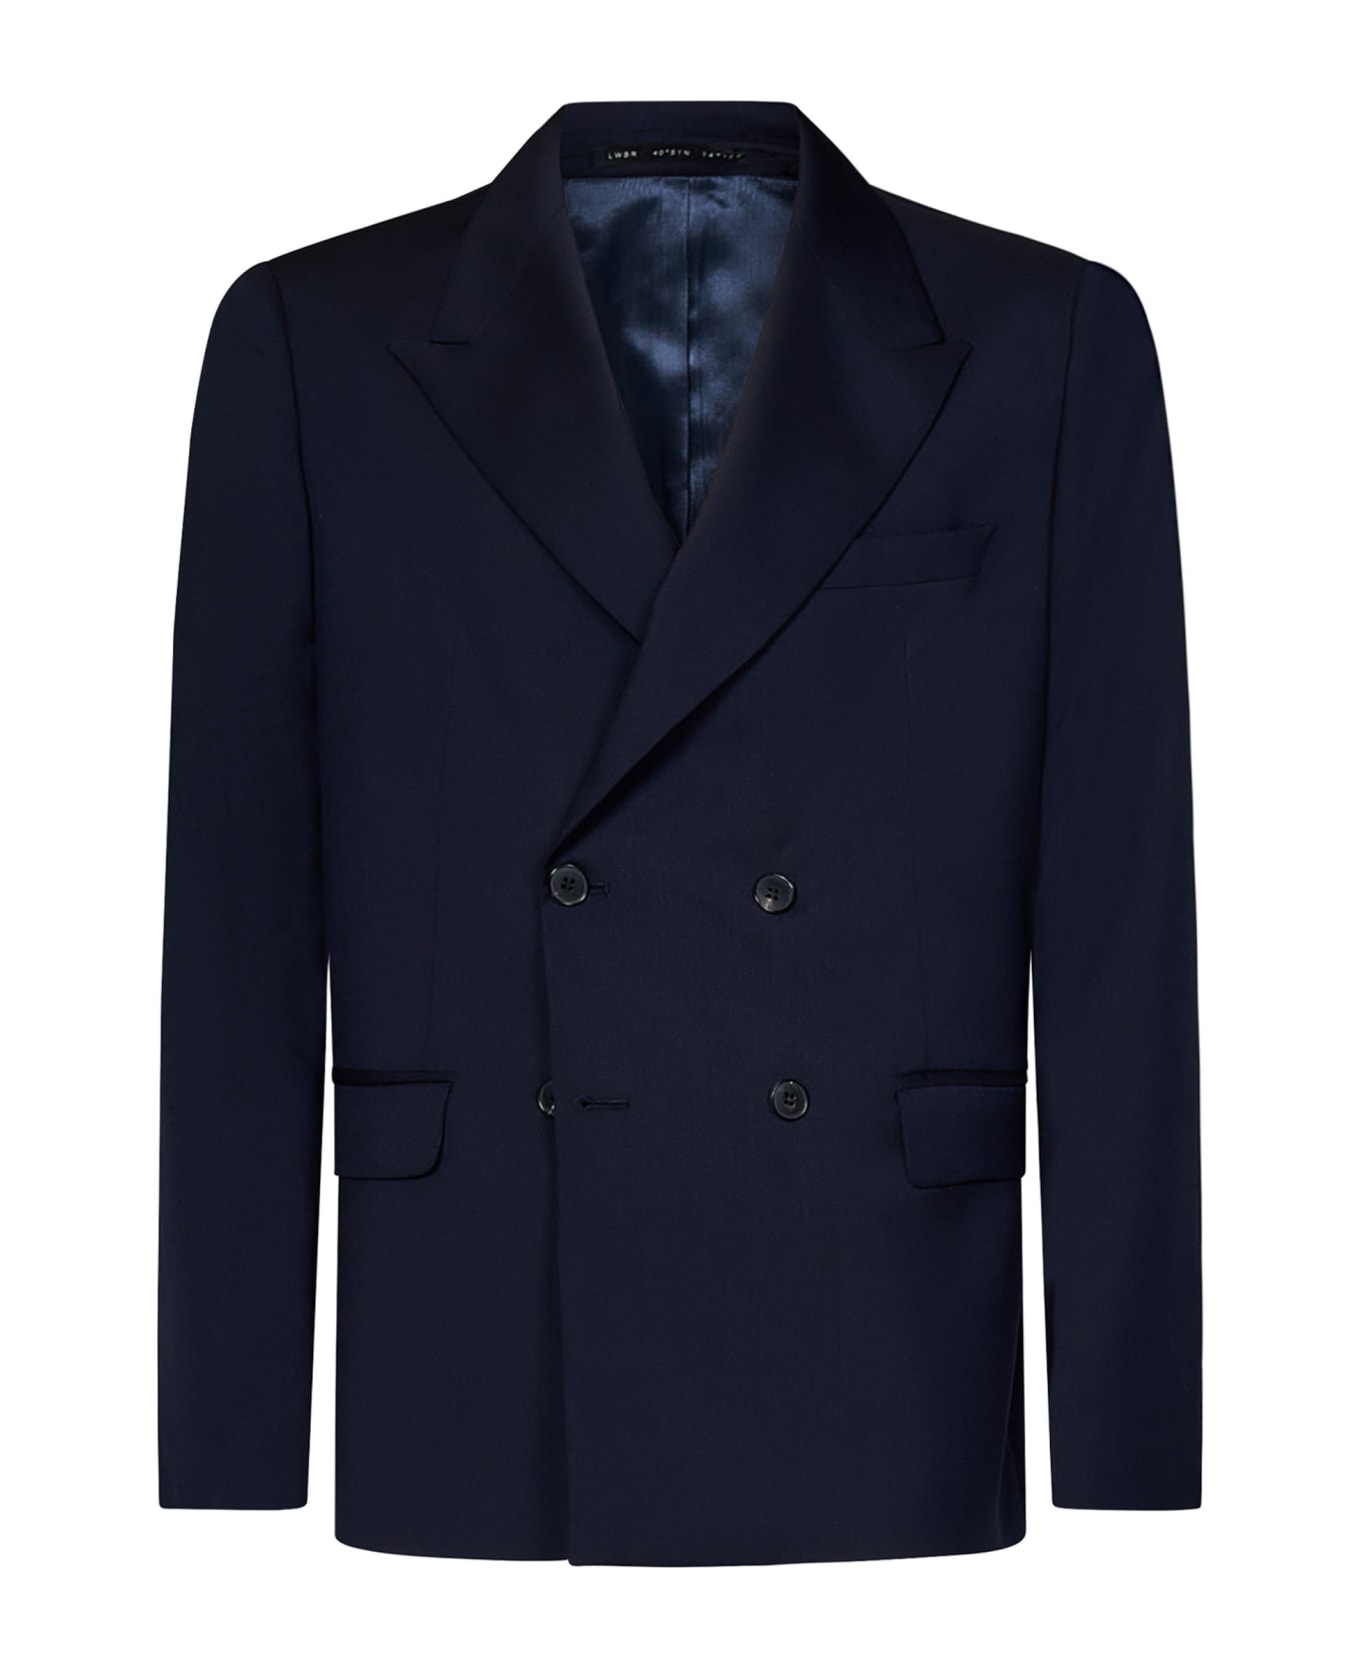 Low Brand 2b Suit - Blue スーツ